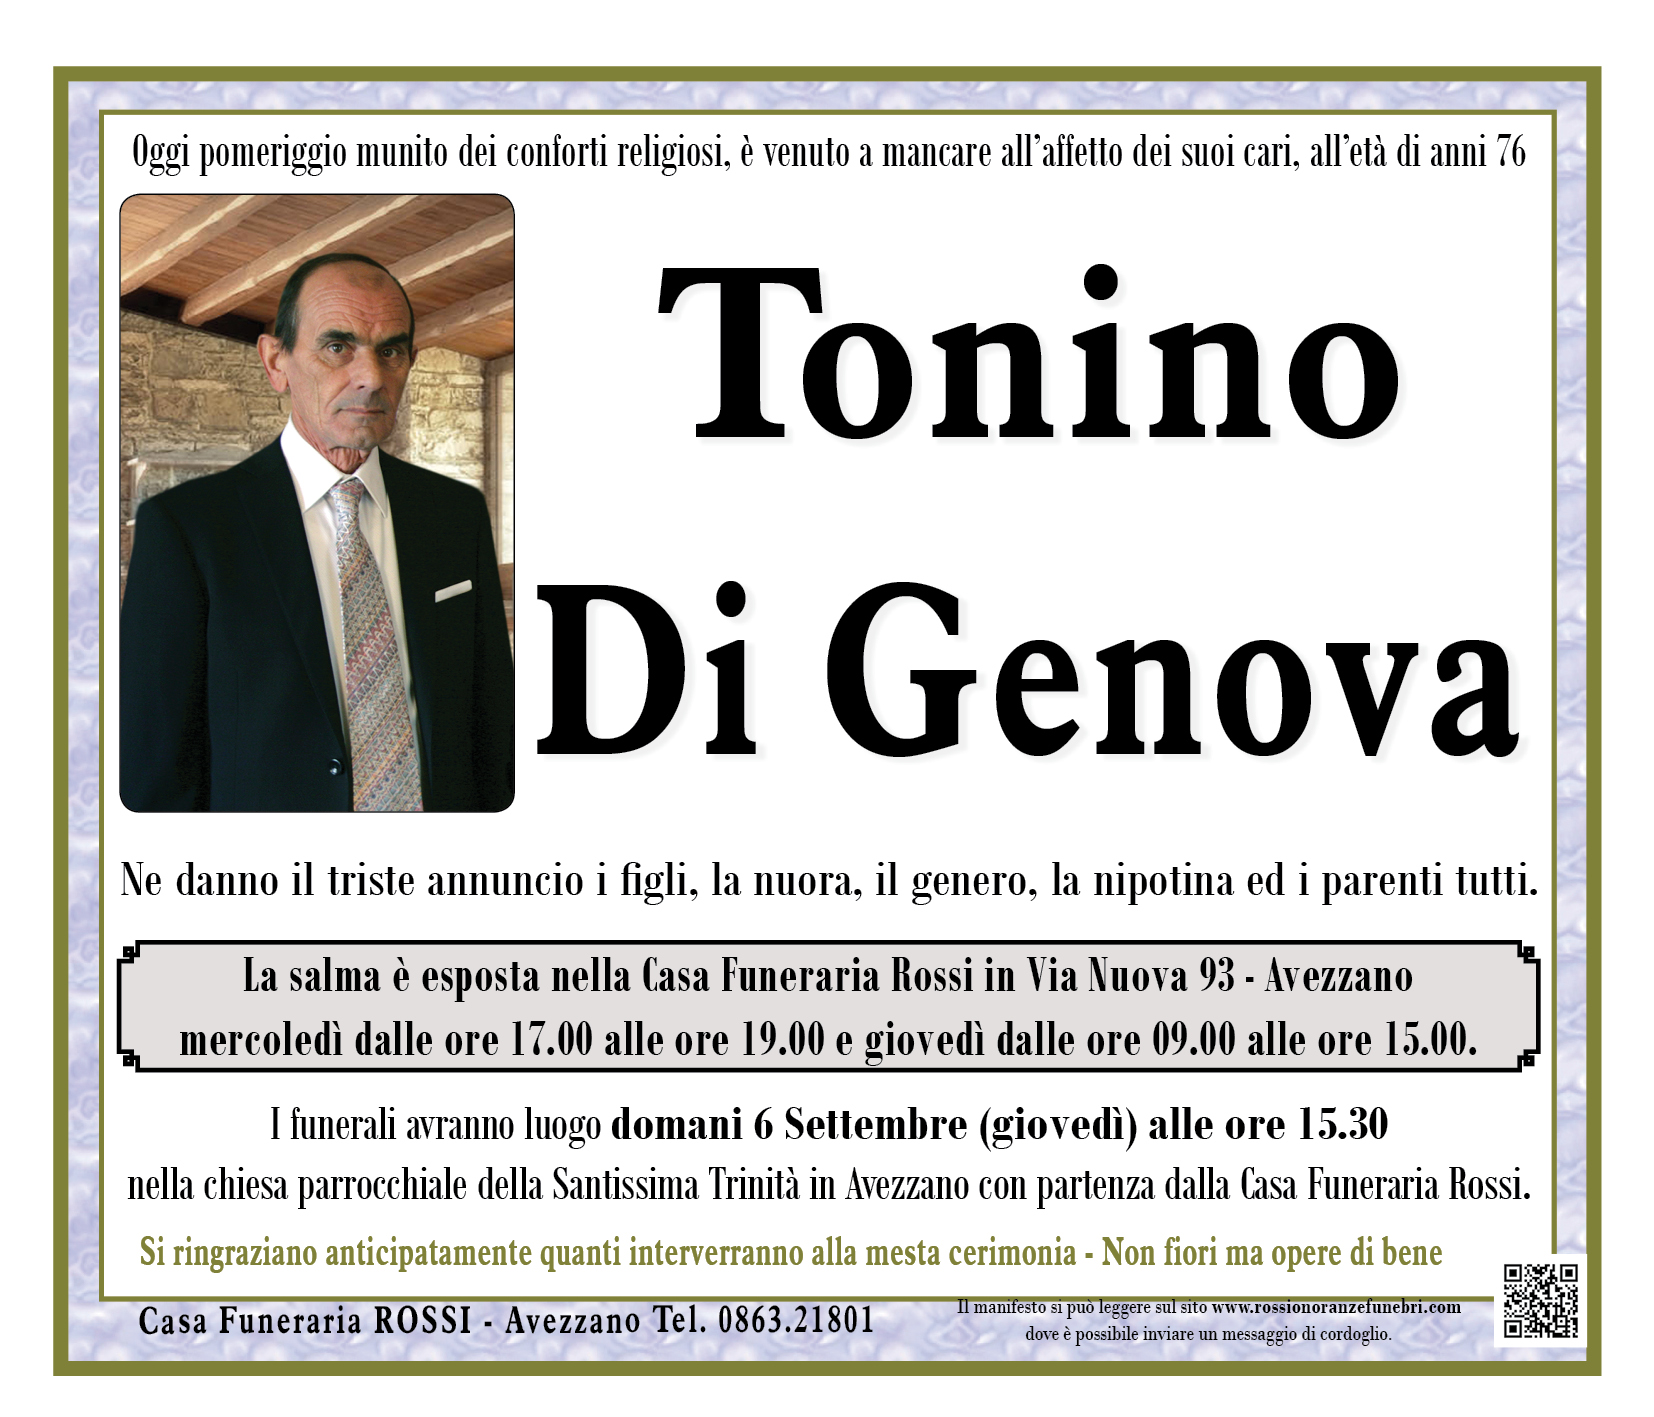 Tonino Di Genova